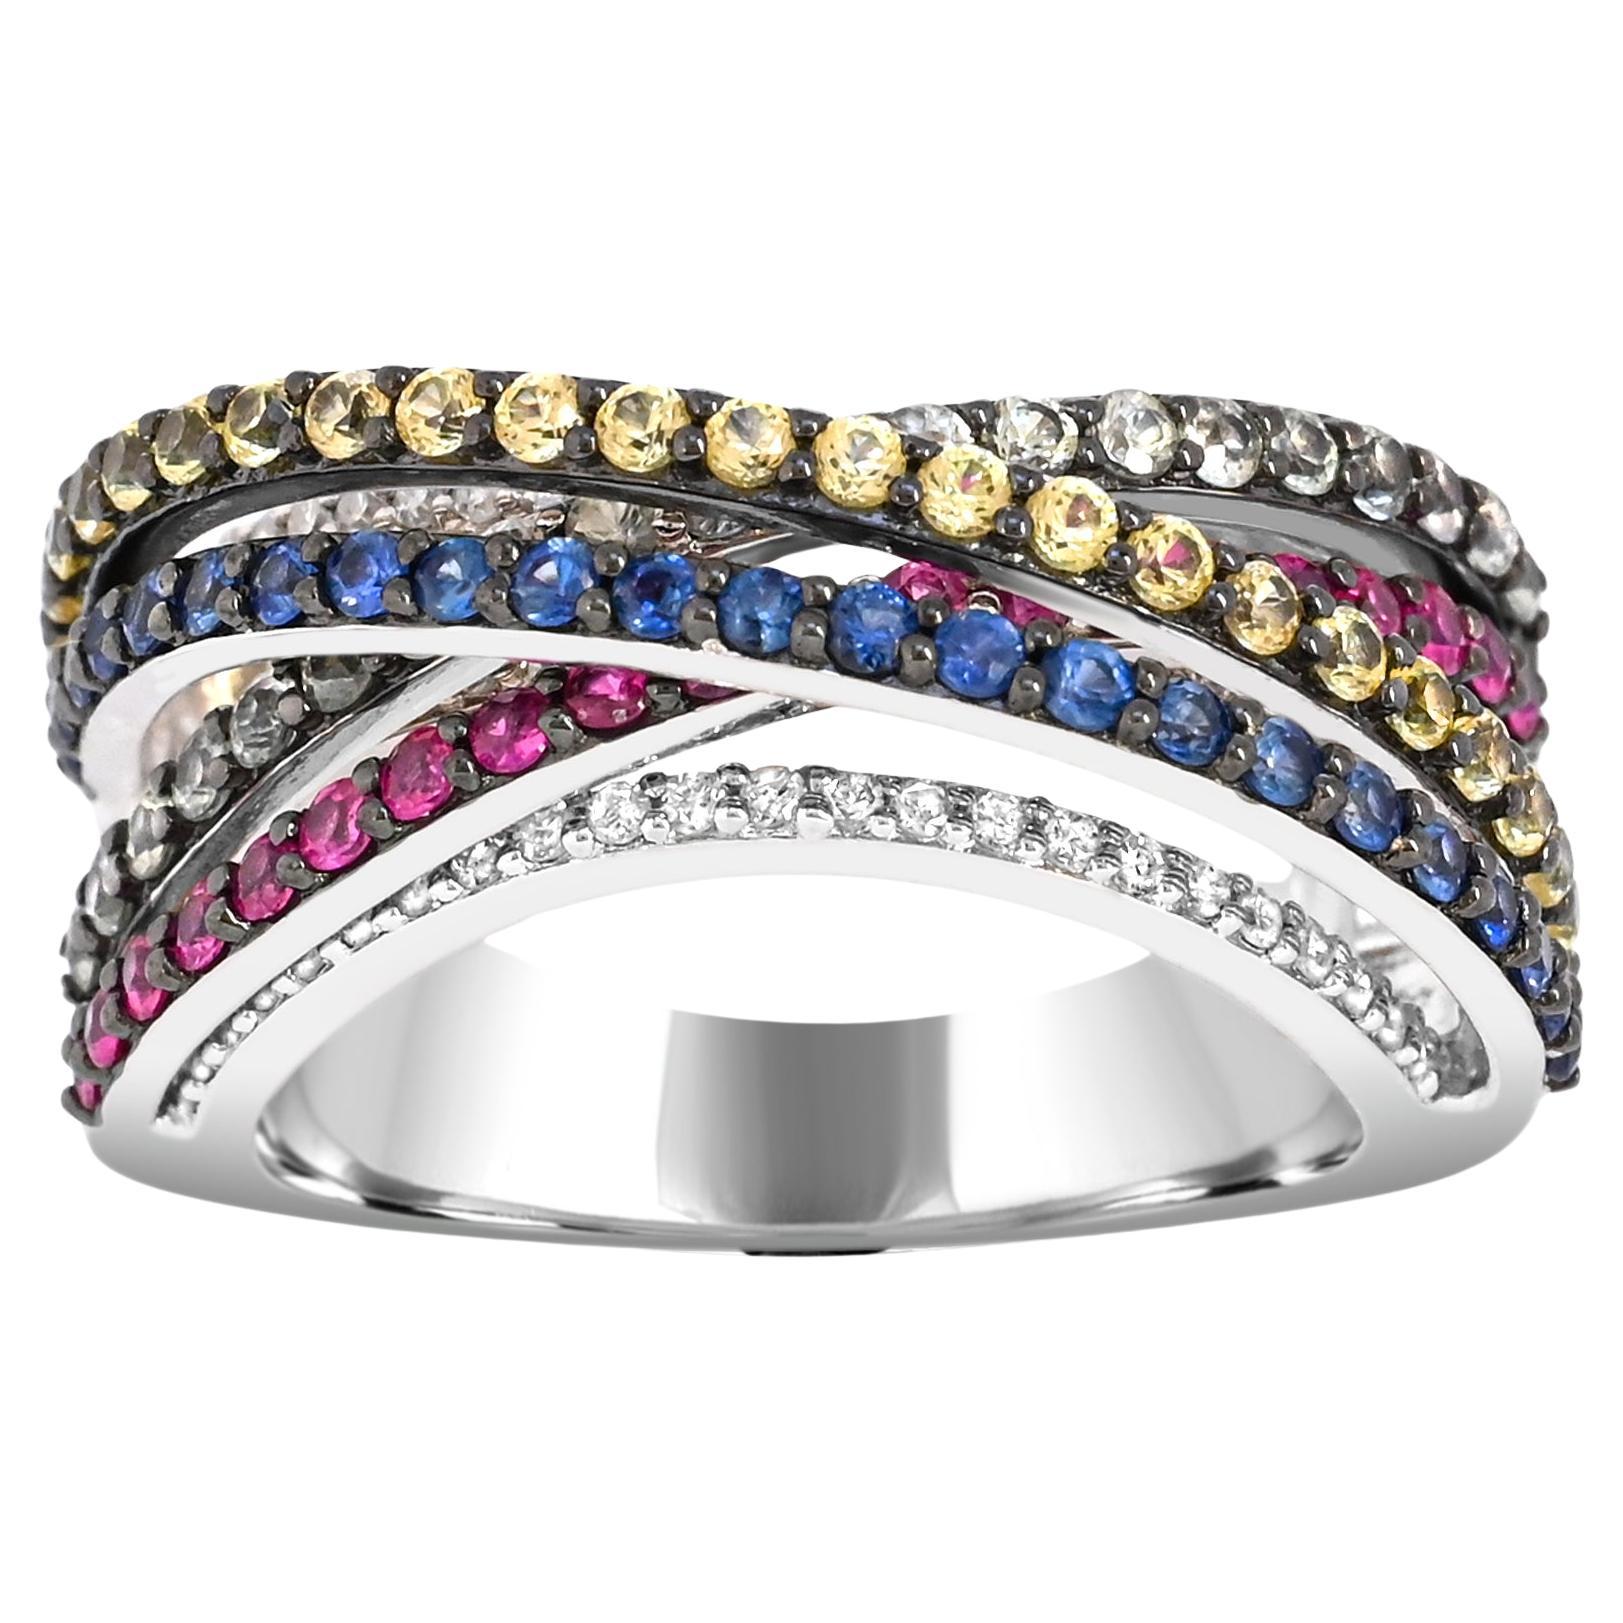 2-7/8ct. Multi-Color Sapphire and Diamond Cross Bridge Ring in Sterling Silver For Sale